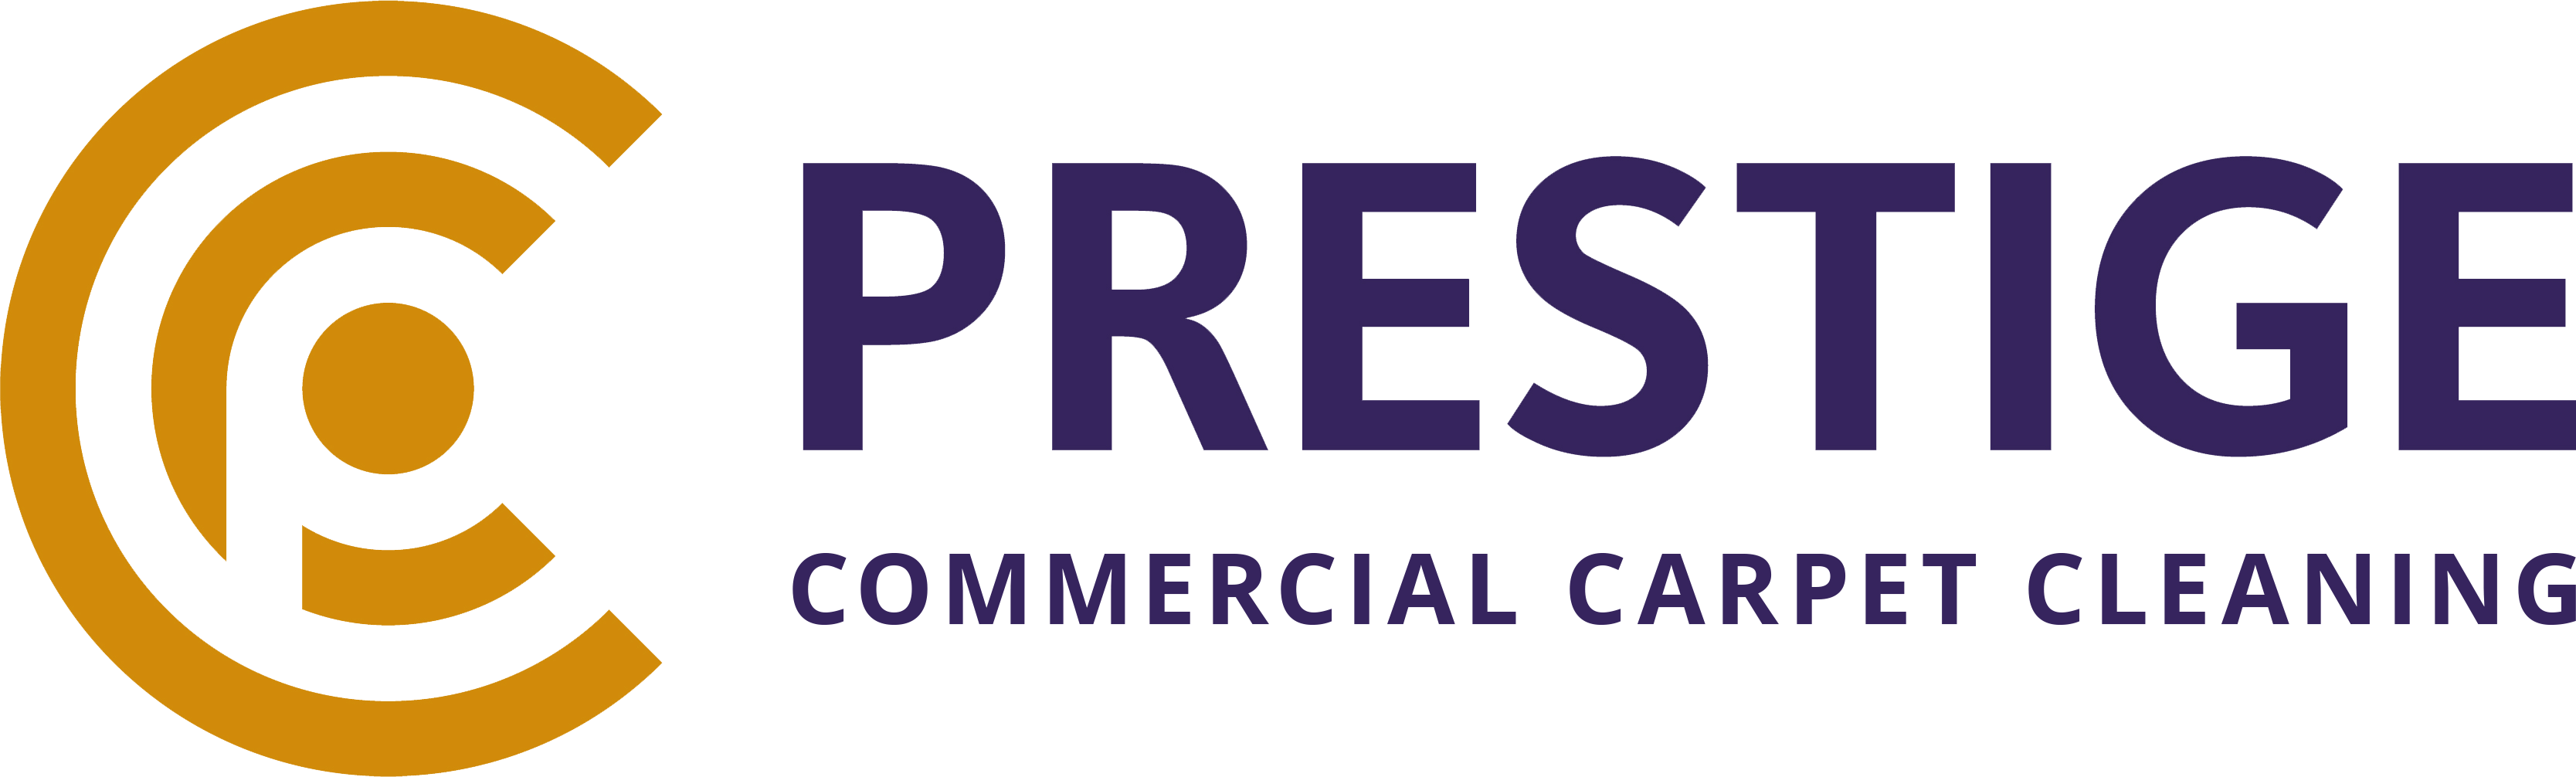 Prestige Carpet Care Ltd T/A Prestige Commercial Carpet Cleaning 